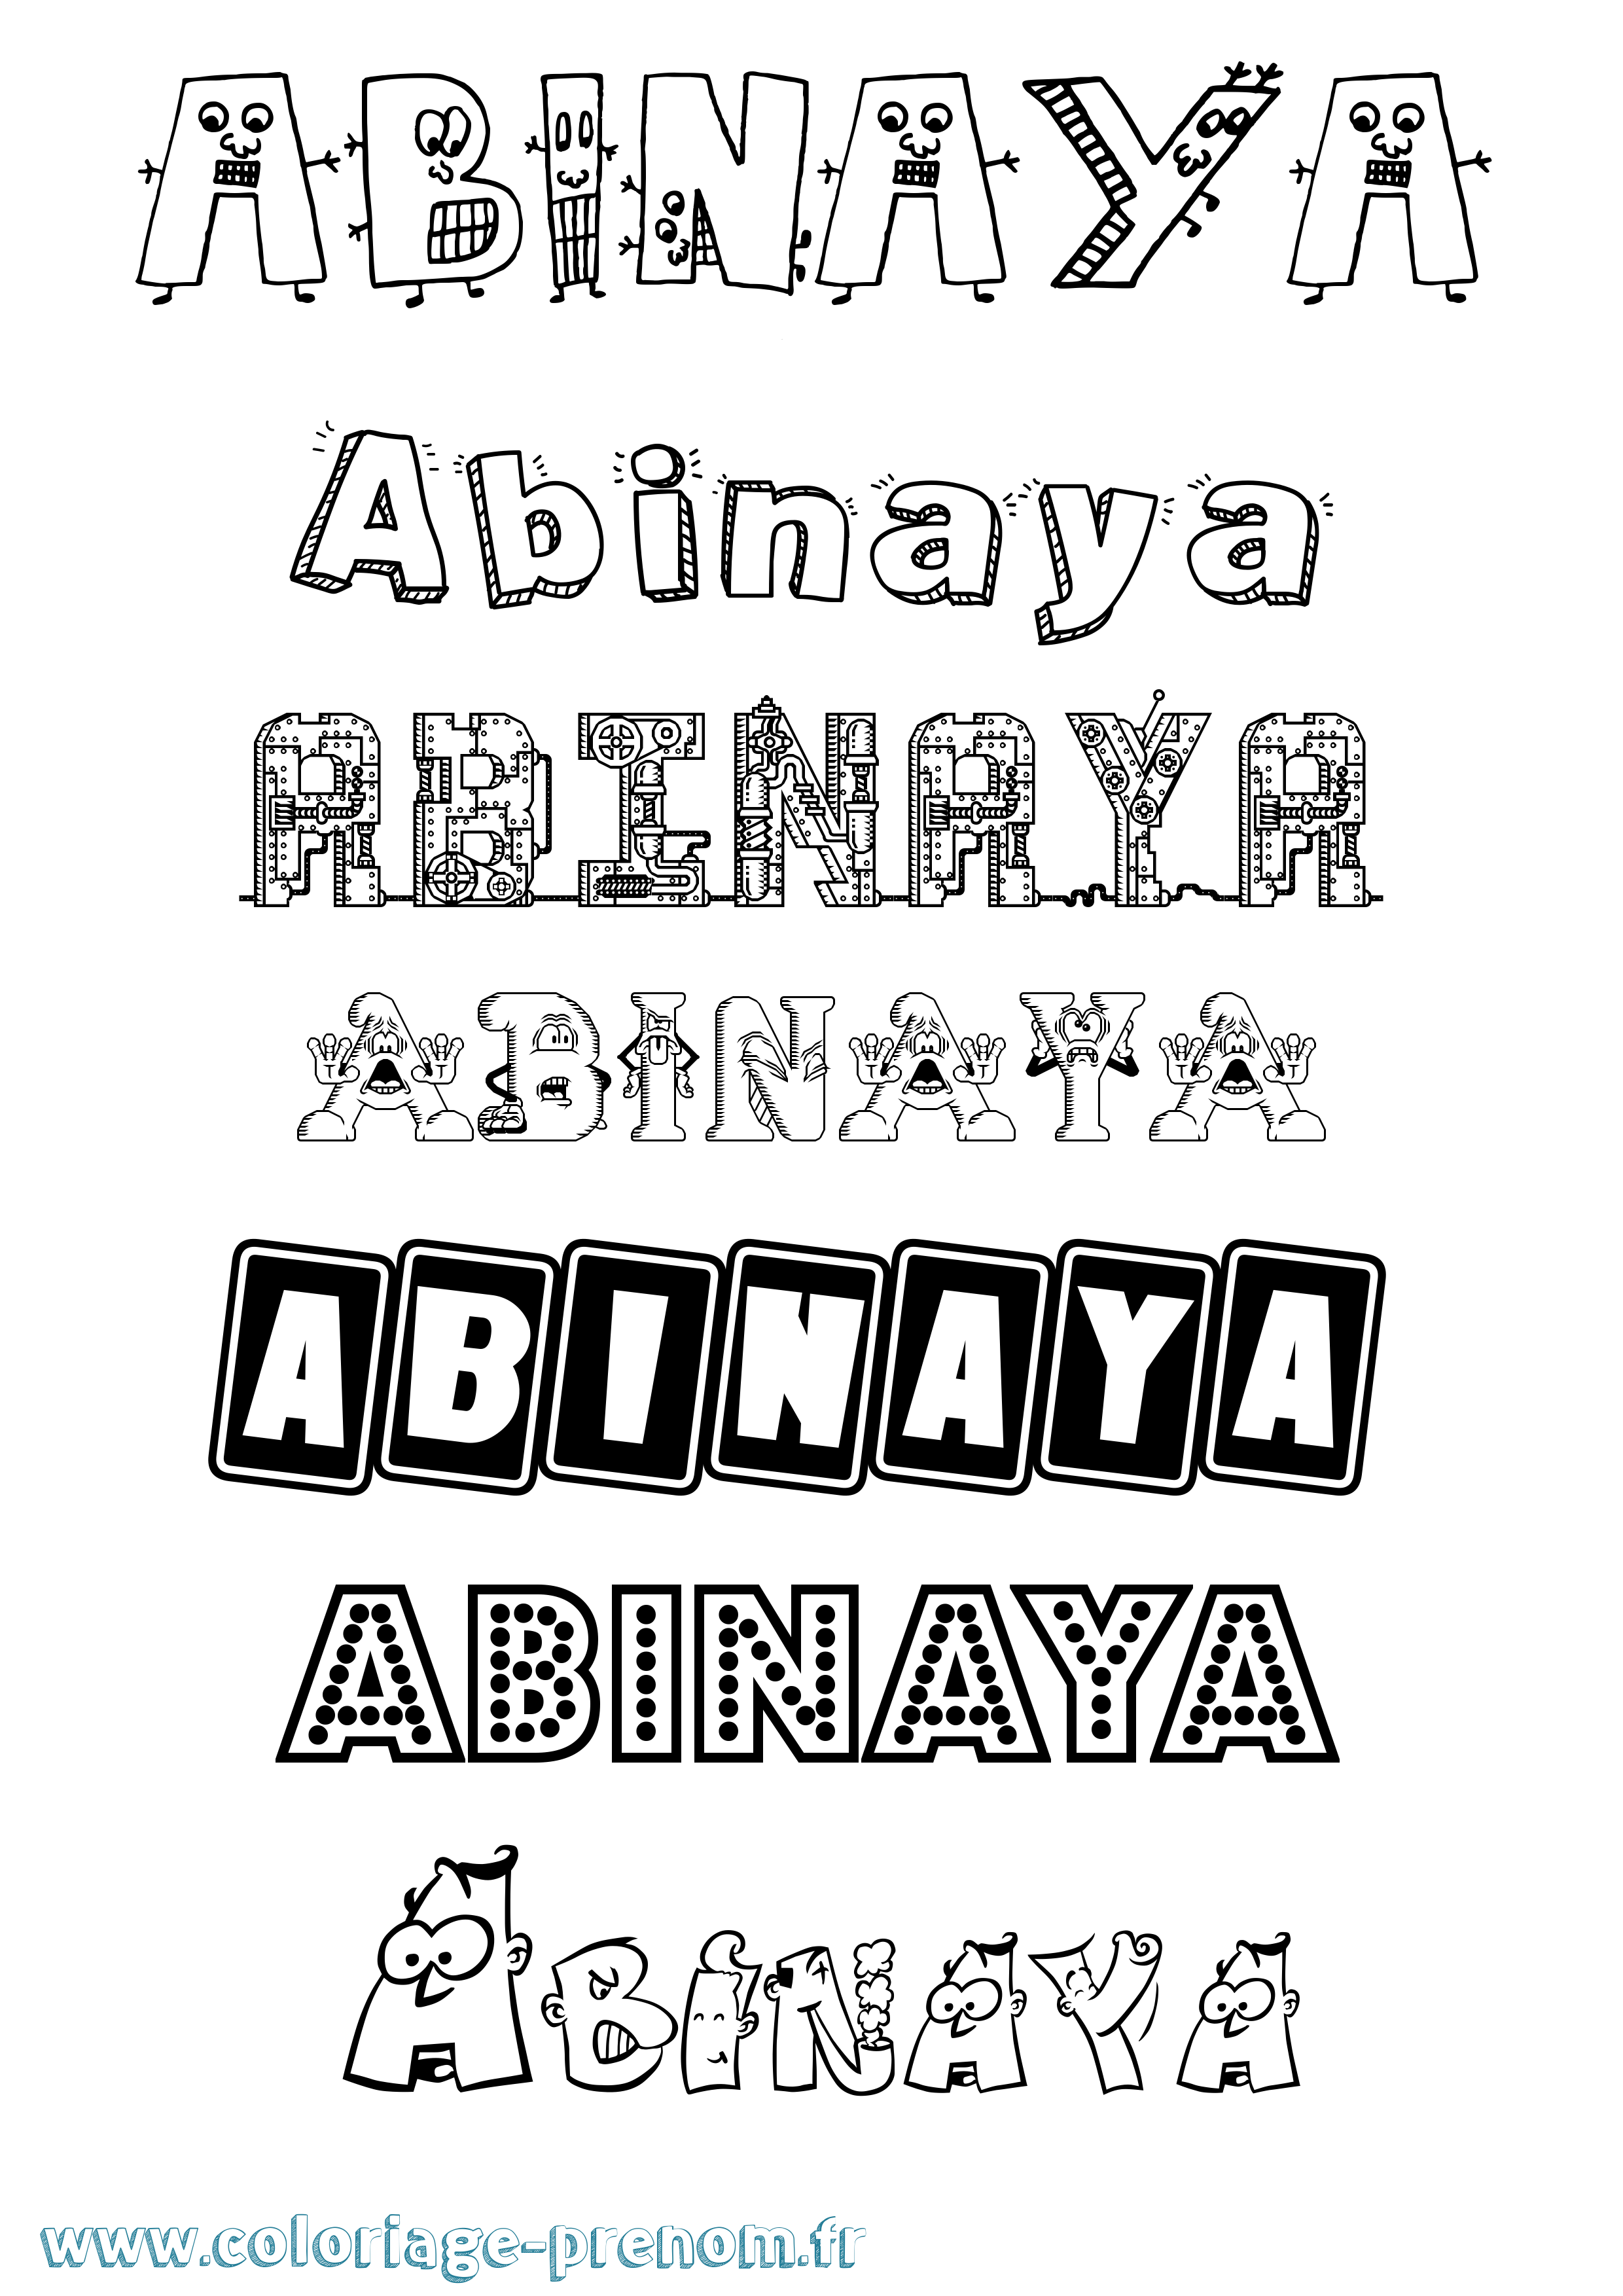 Coloriage prénom Abinaya Fun